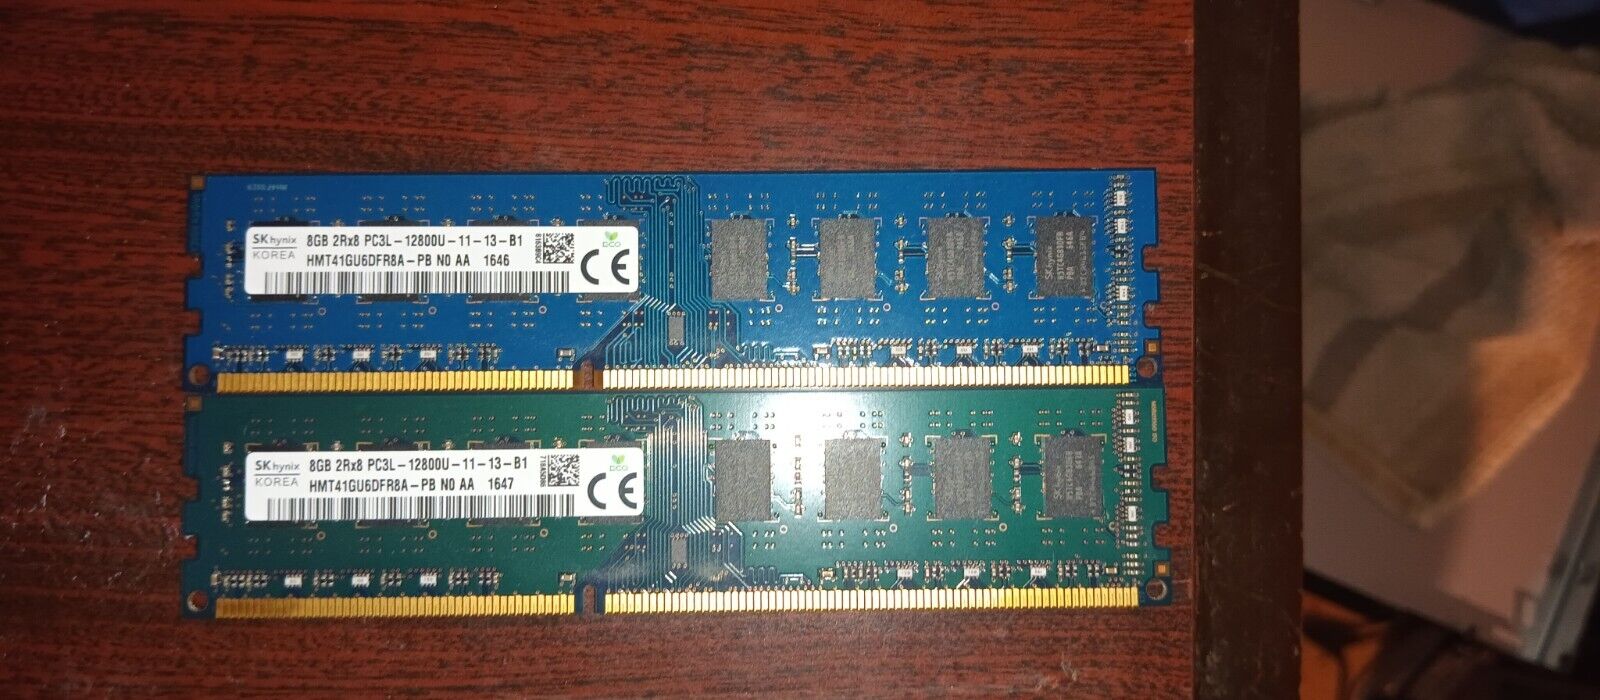 Hynix HMT351U6CFR8C-PB PC3-12800U DDR3 8GB RAM Memory